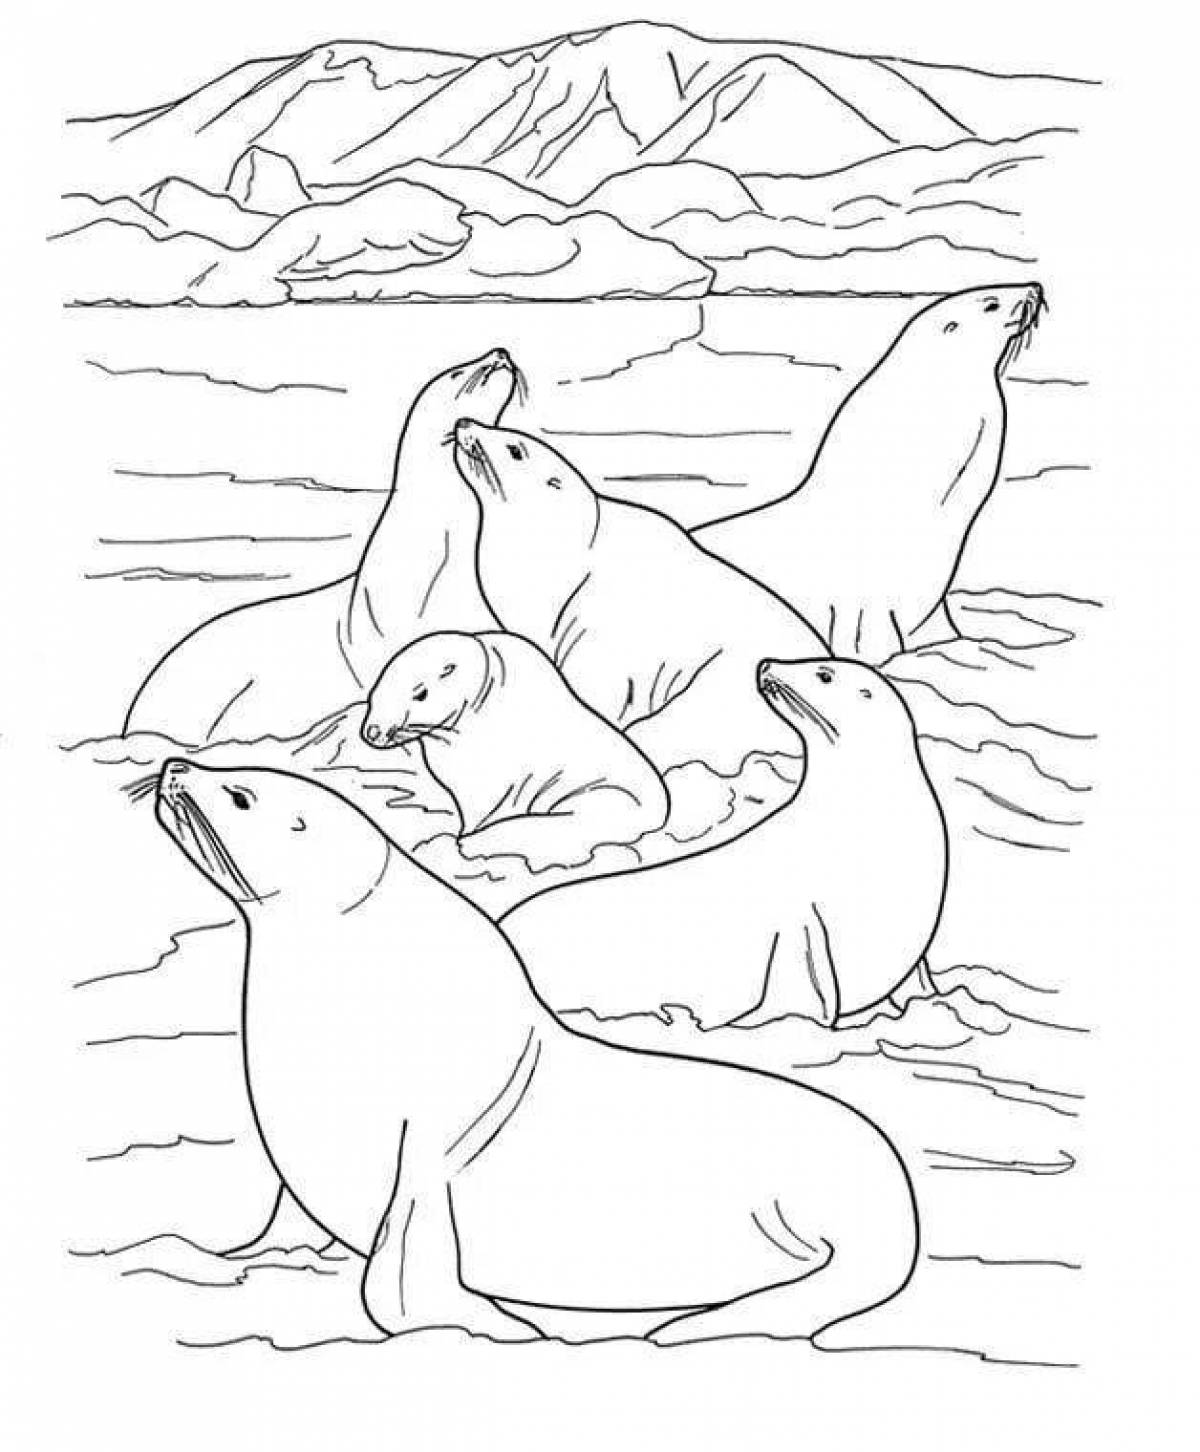 Adorable animals of Antarctica coloring page